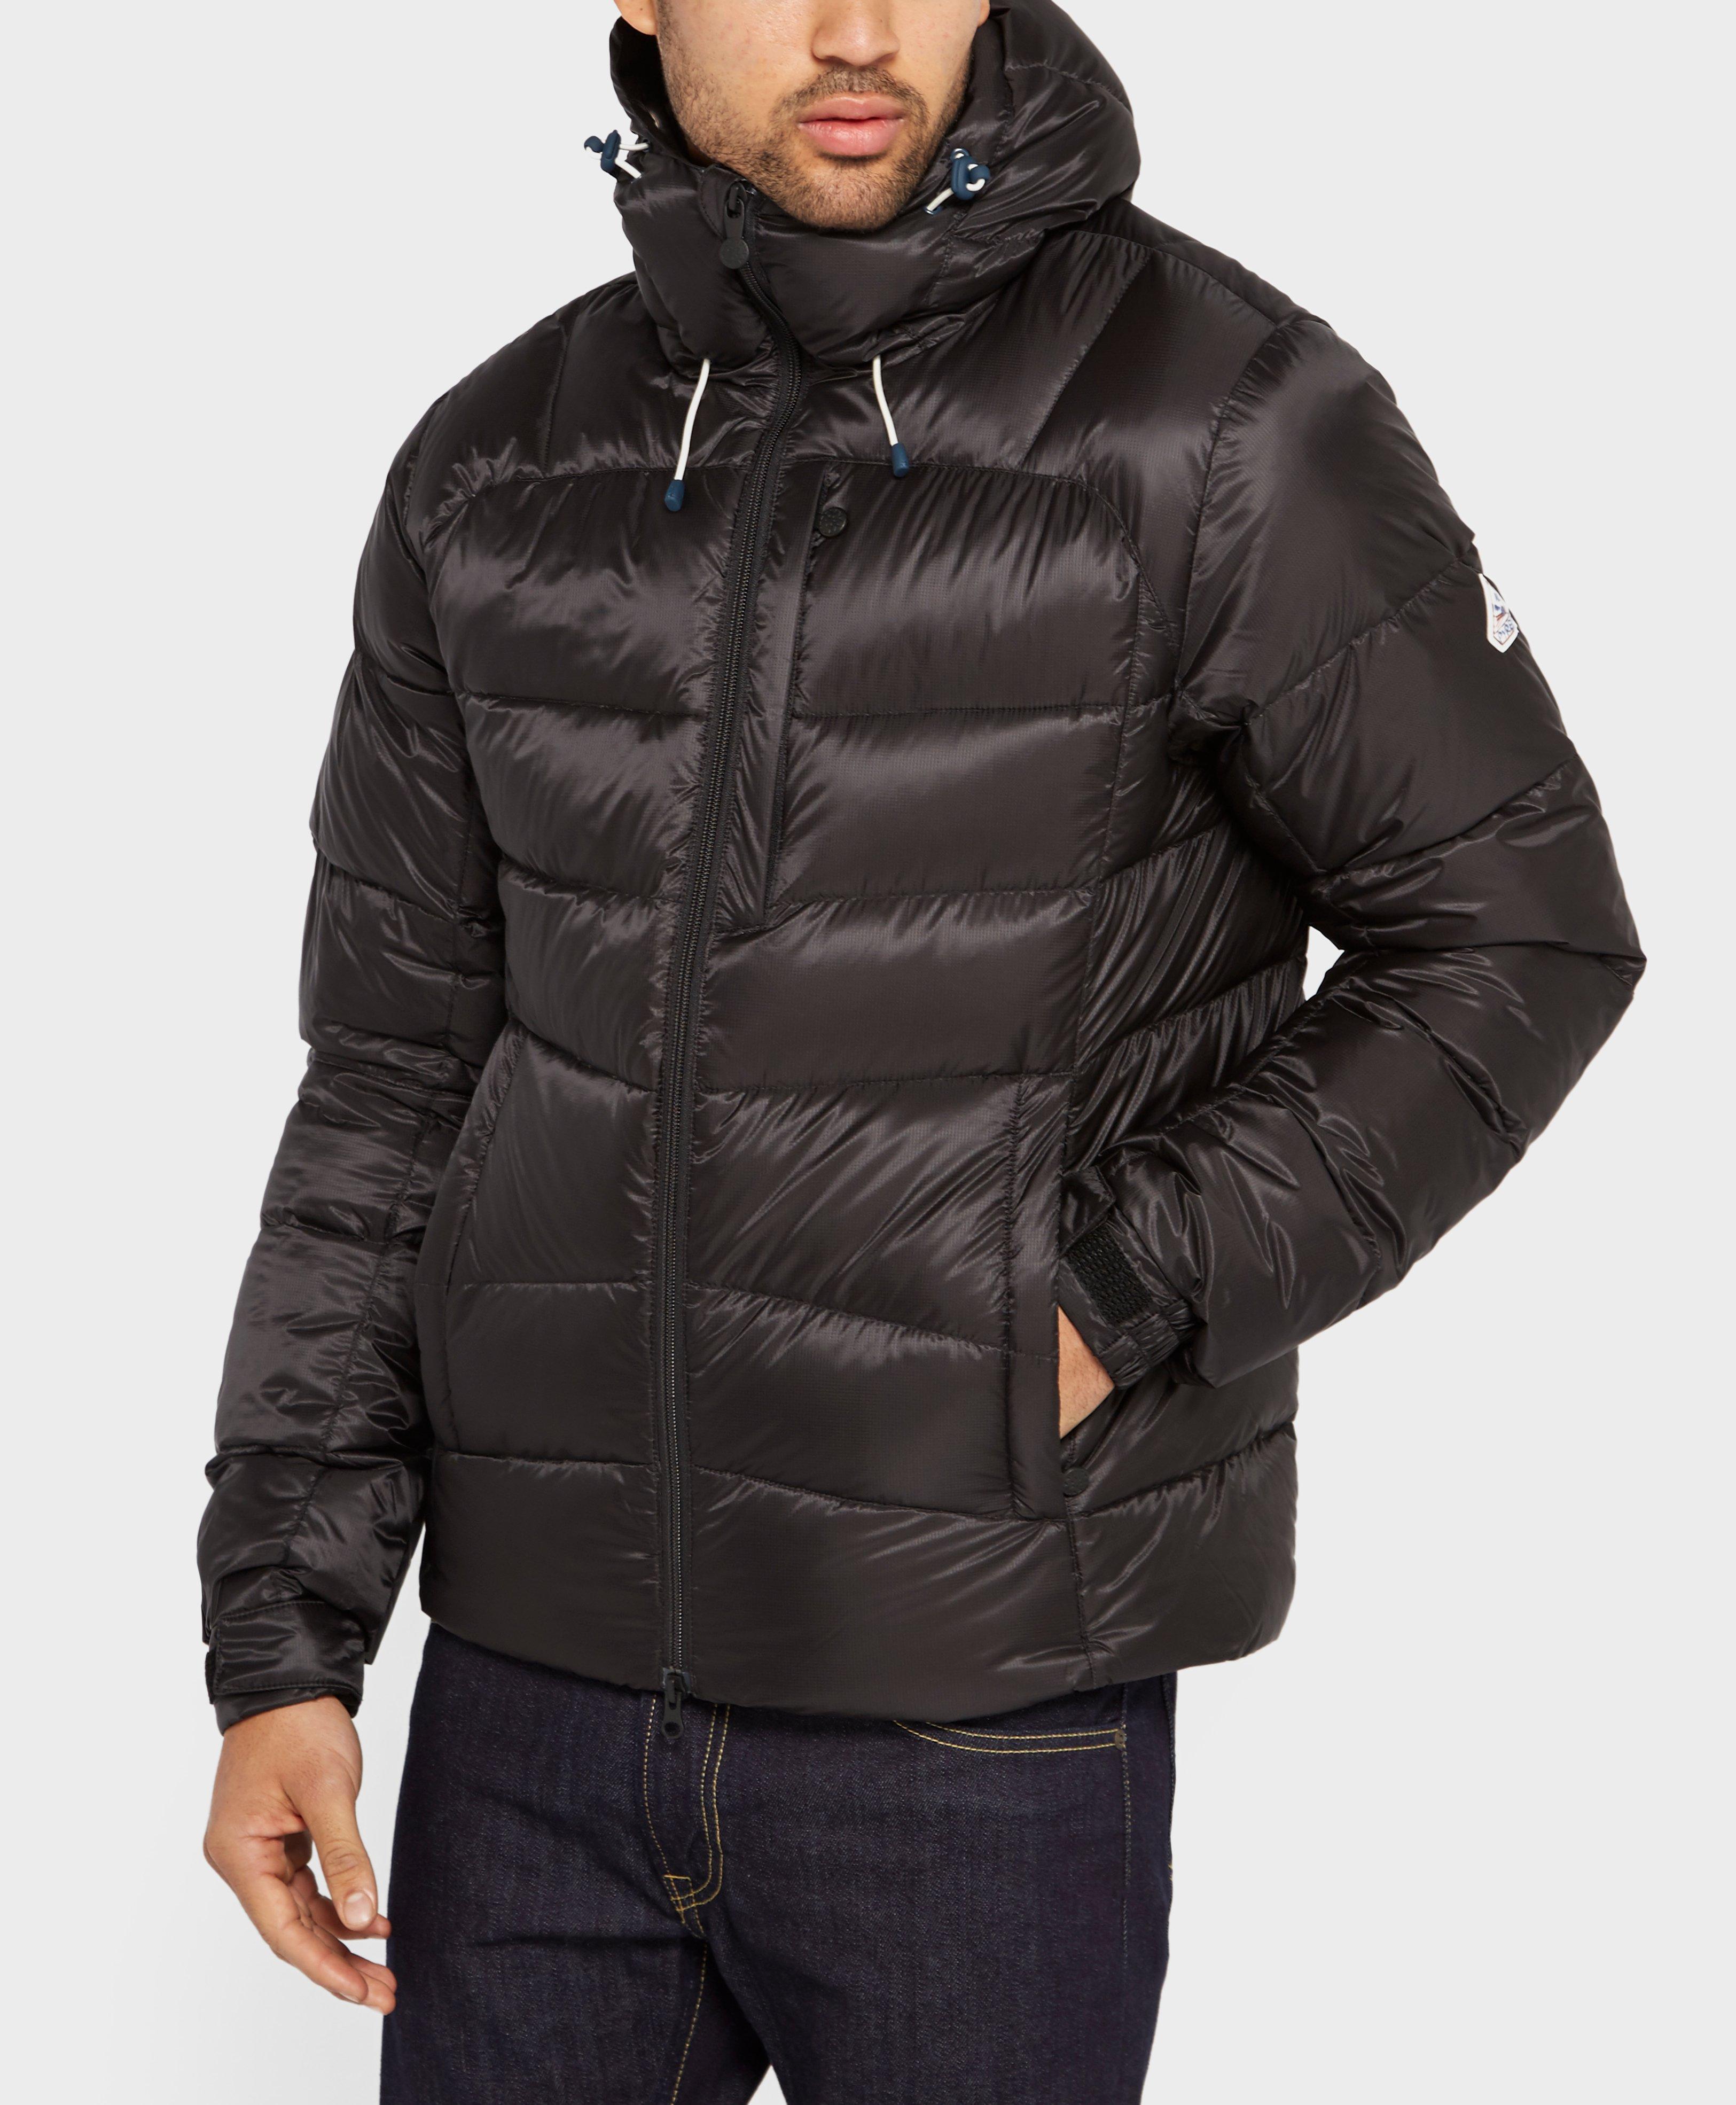 Lyst - Pyrenex Hudson Padded Jacket in Black for Men